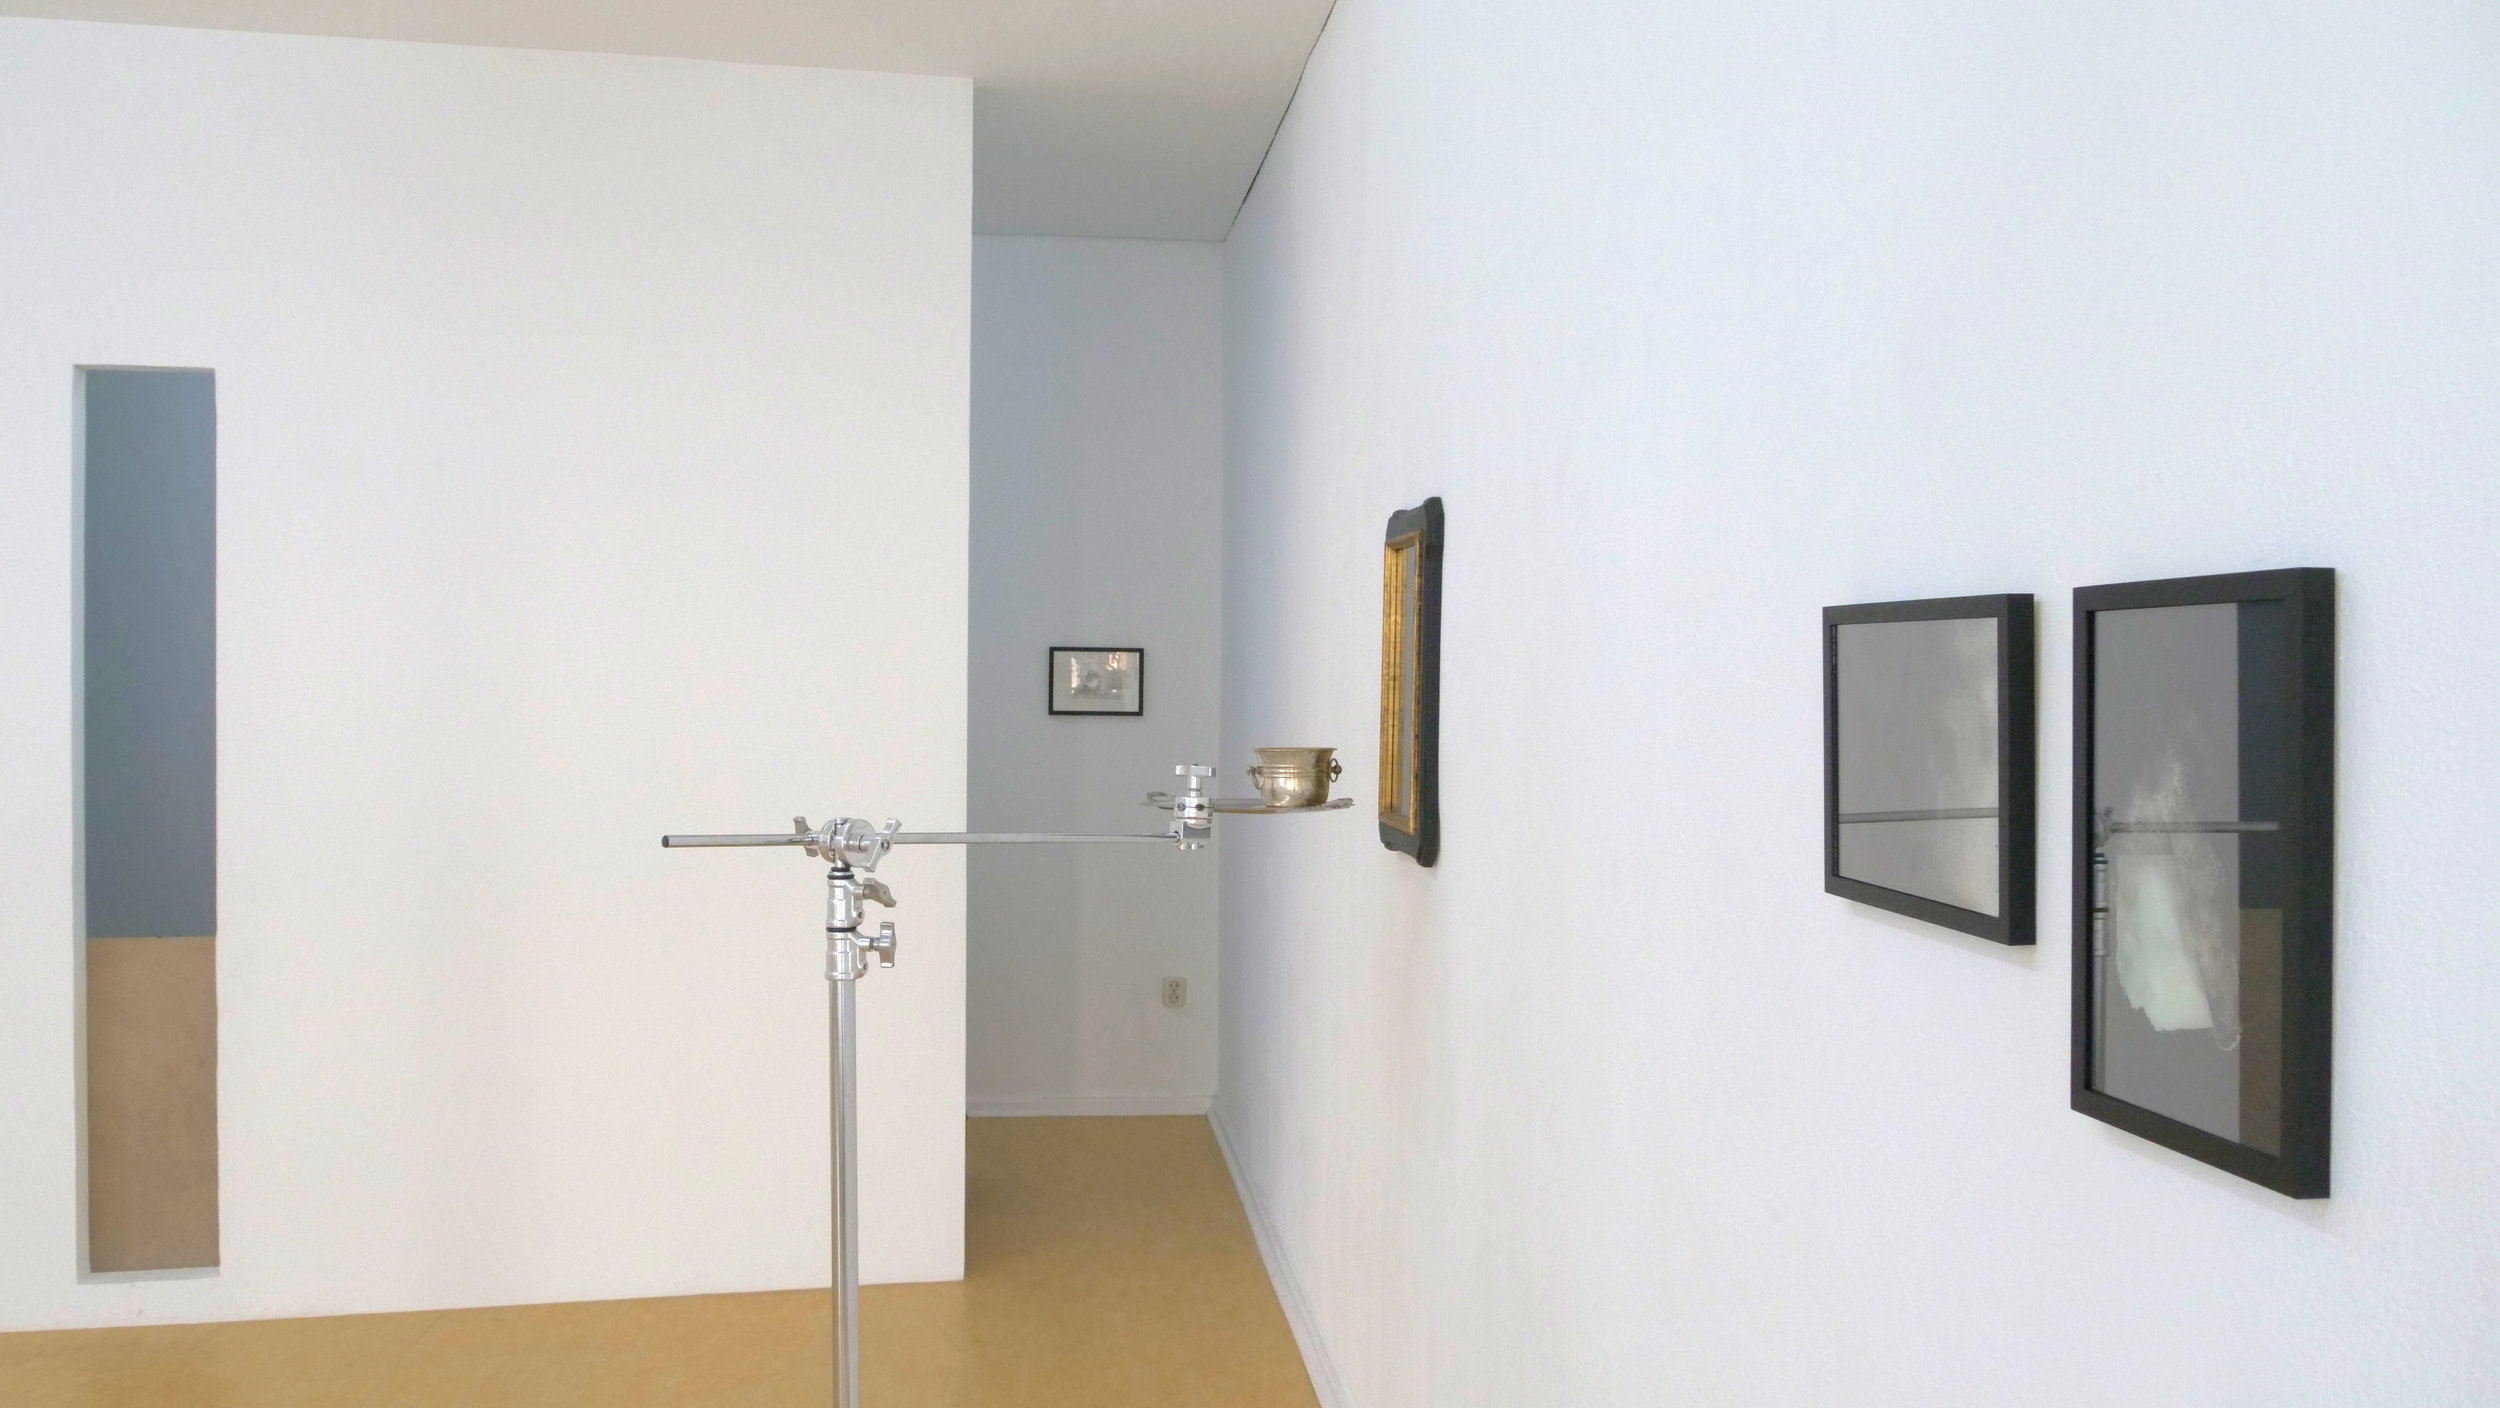  Installation view, Timeline, KM, Berlin, 2019 